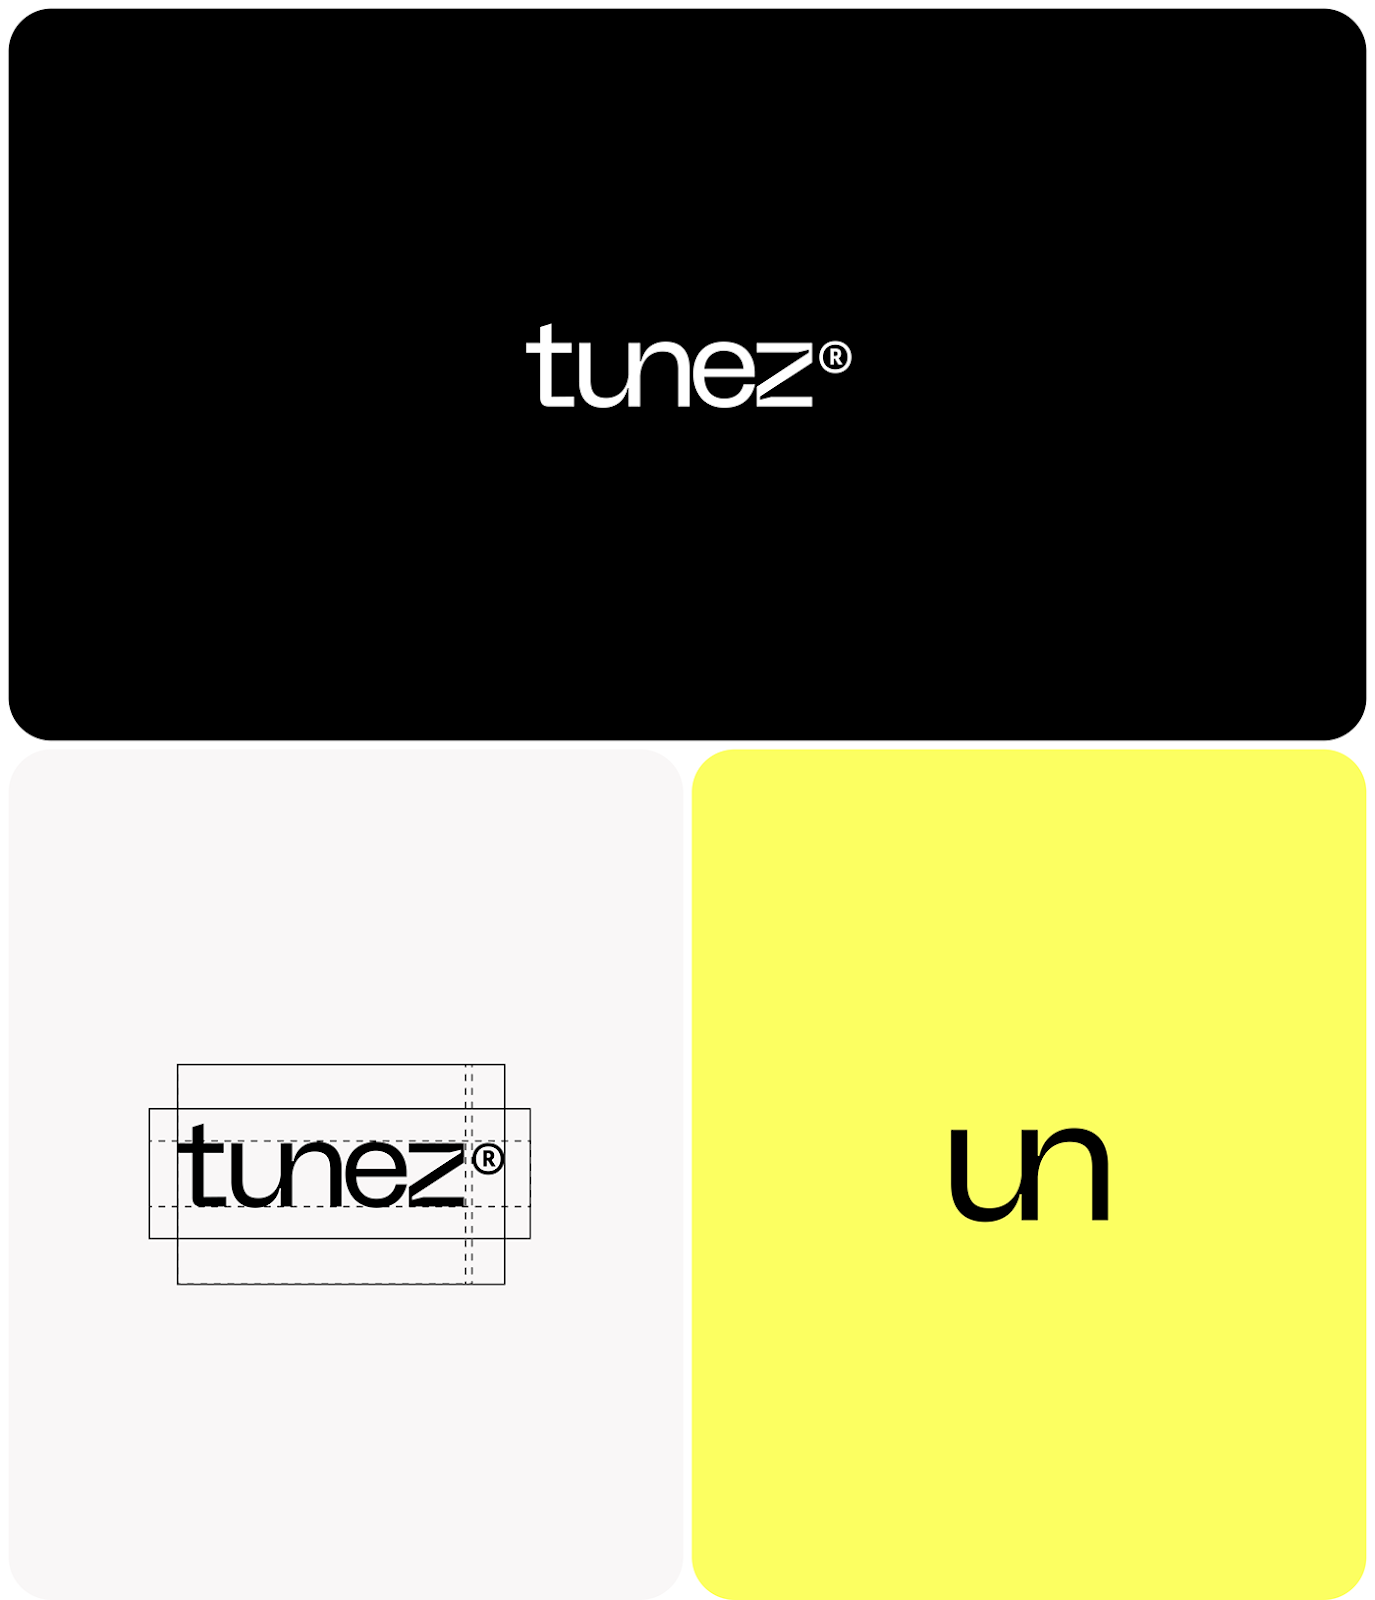 App design design ux UI branding  corporate development software SAAS music app app